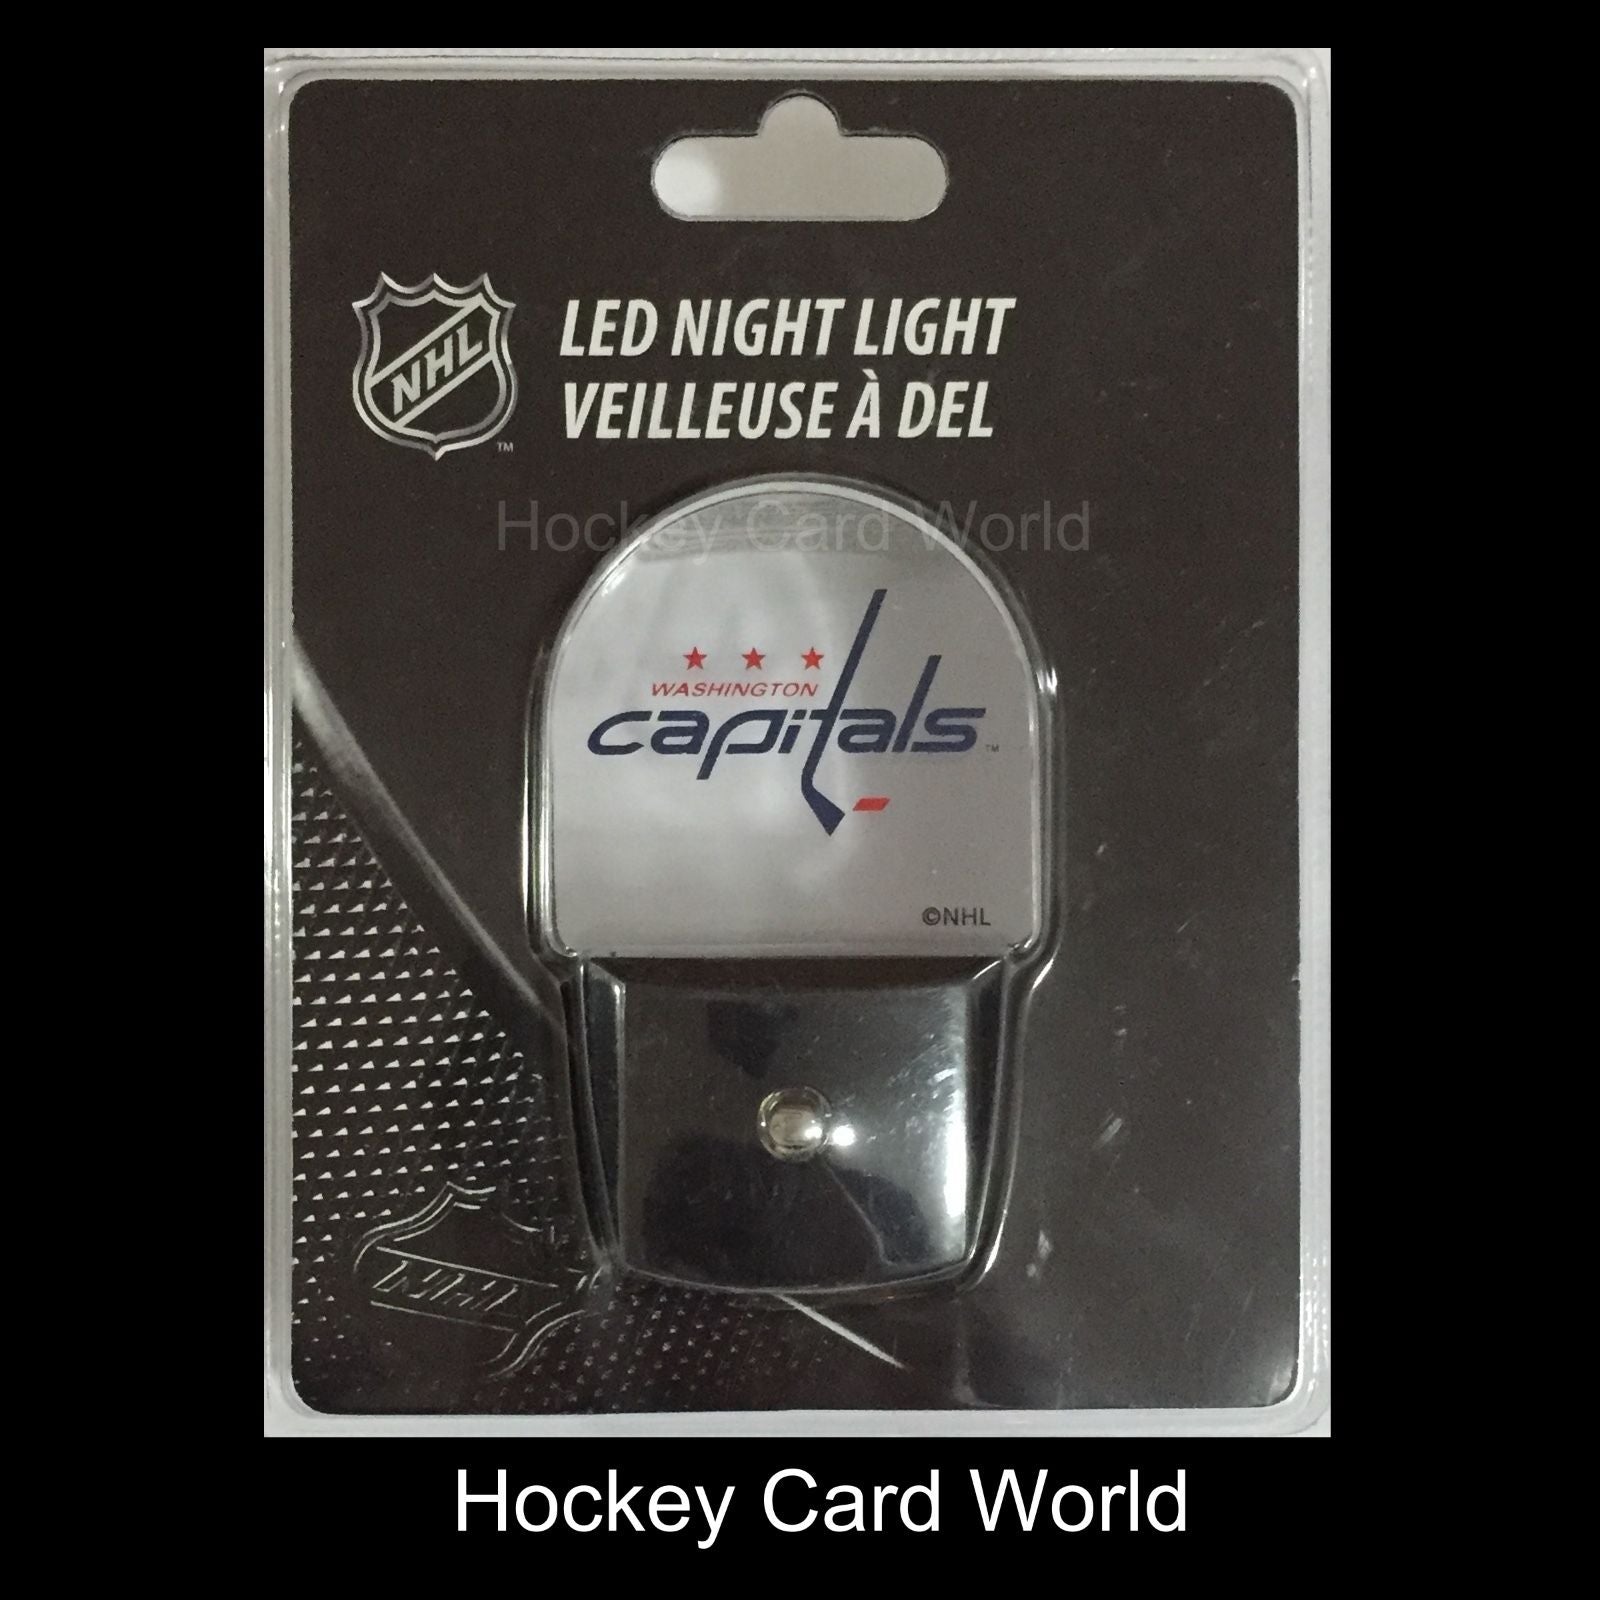  Washington Capitals Licensed NHL LED Night Light - Brand New In Box Image 1